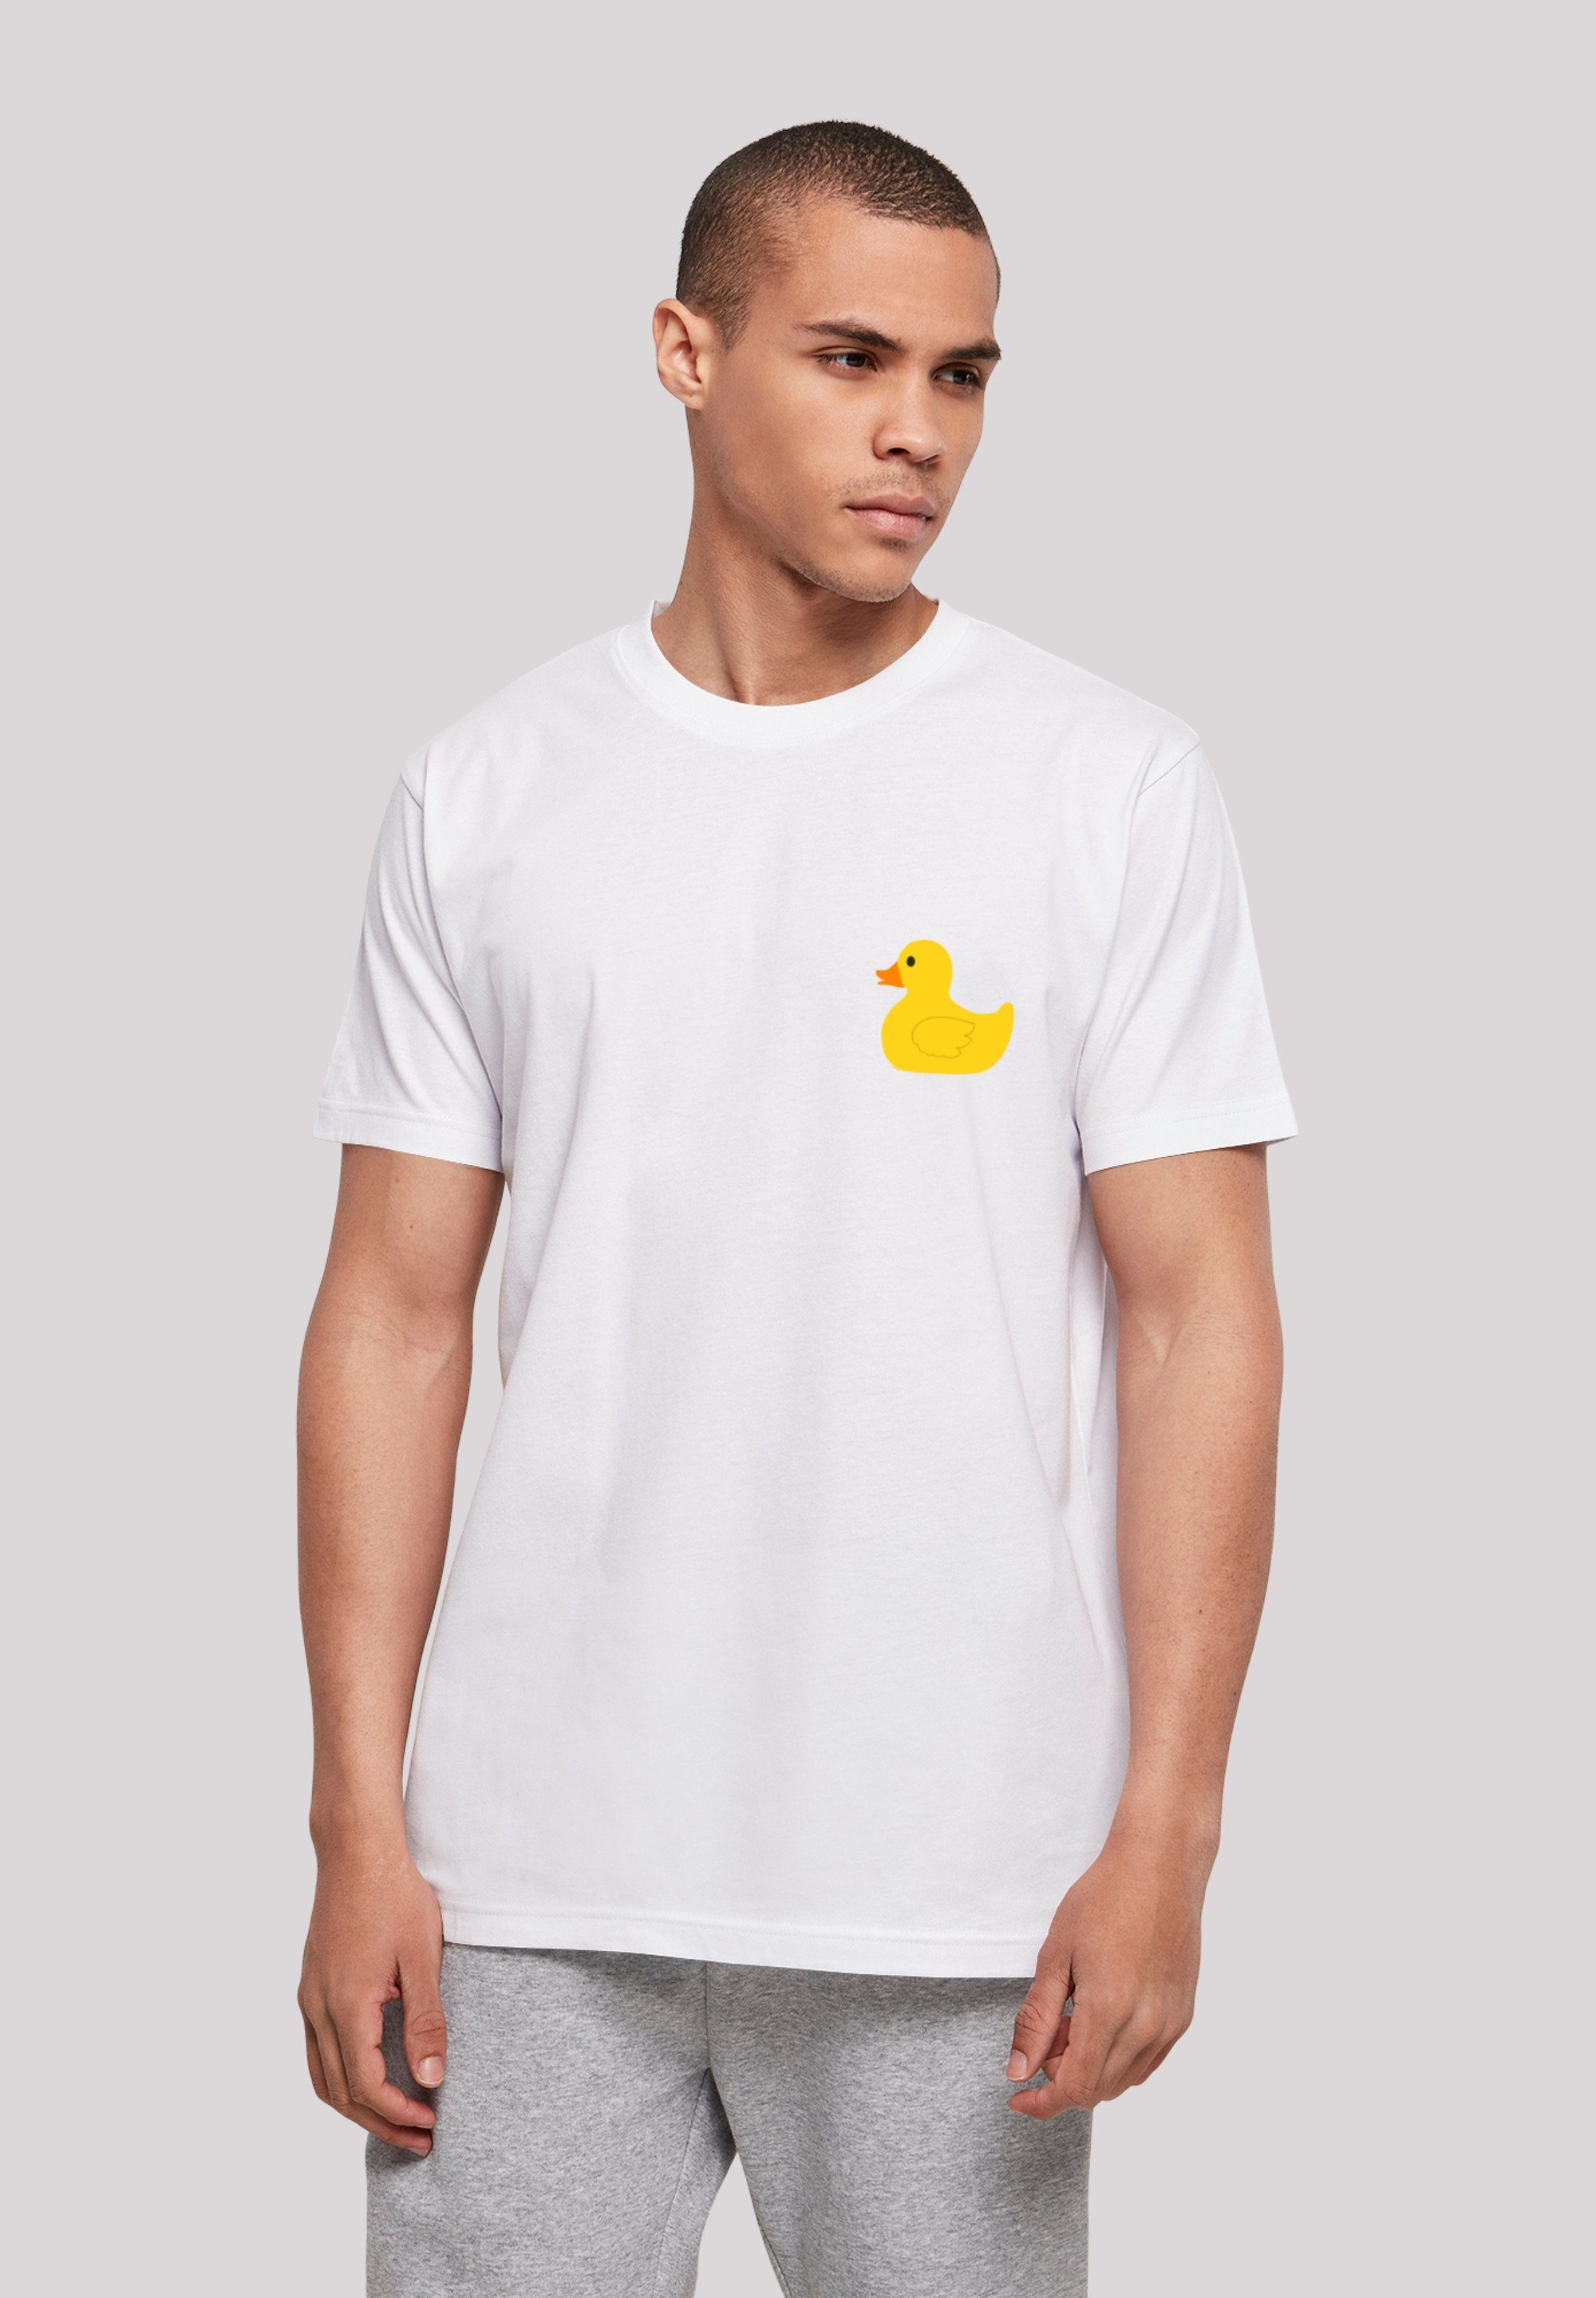 F4NT4STIC T-Shirt Yellow Rubber Duck TEE UNISEX Print weiß